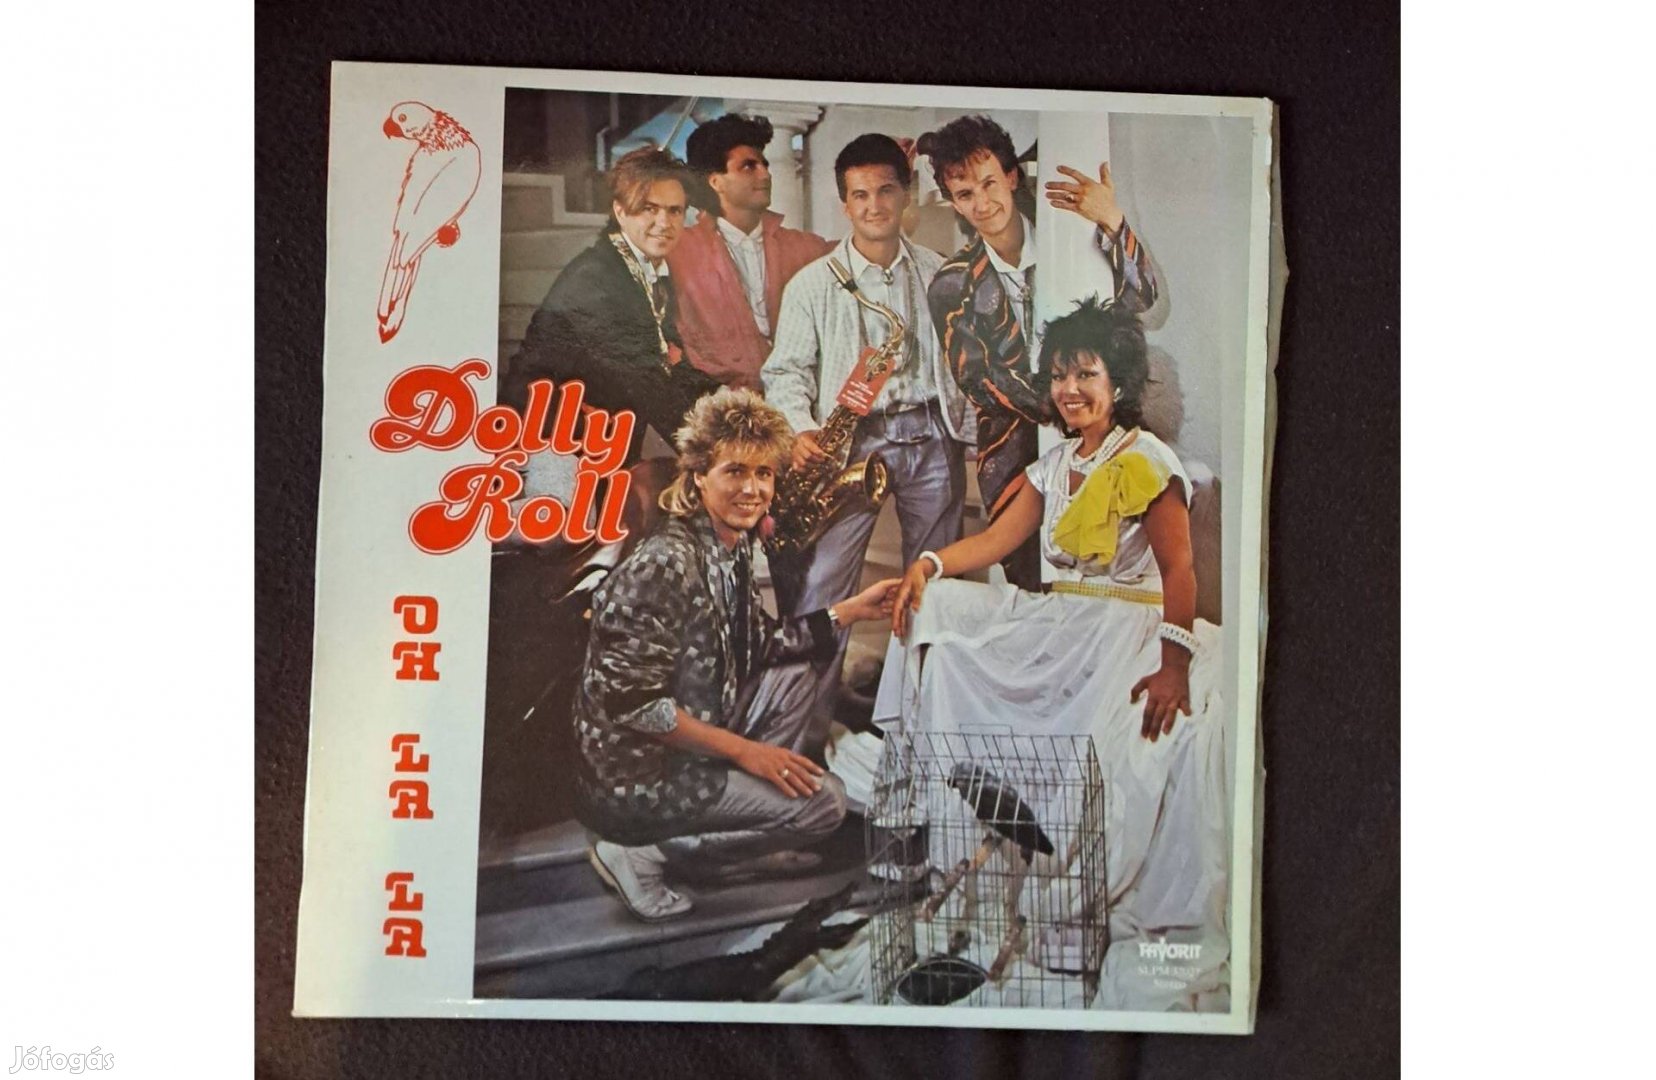 Dolly Roll Oh La La LP